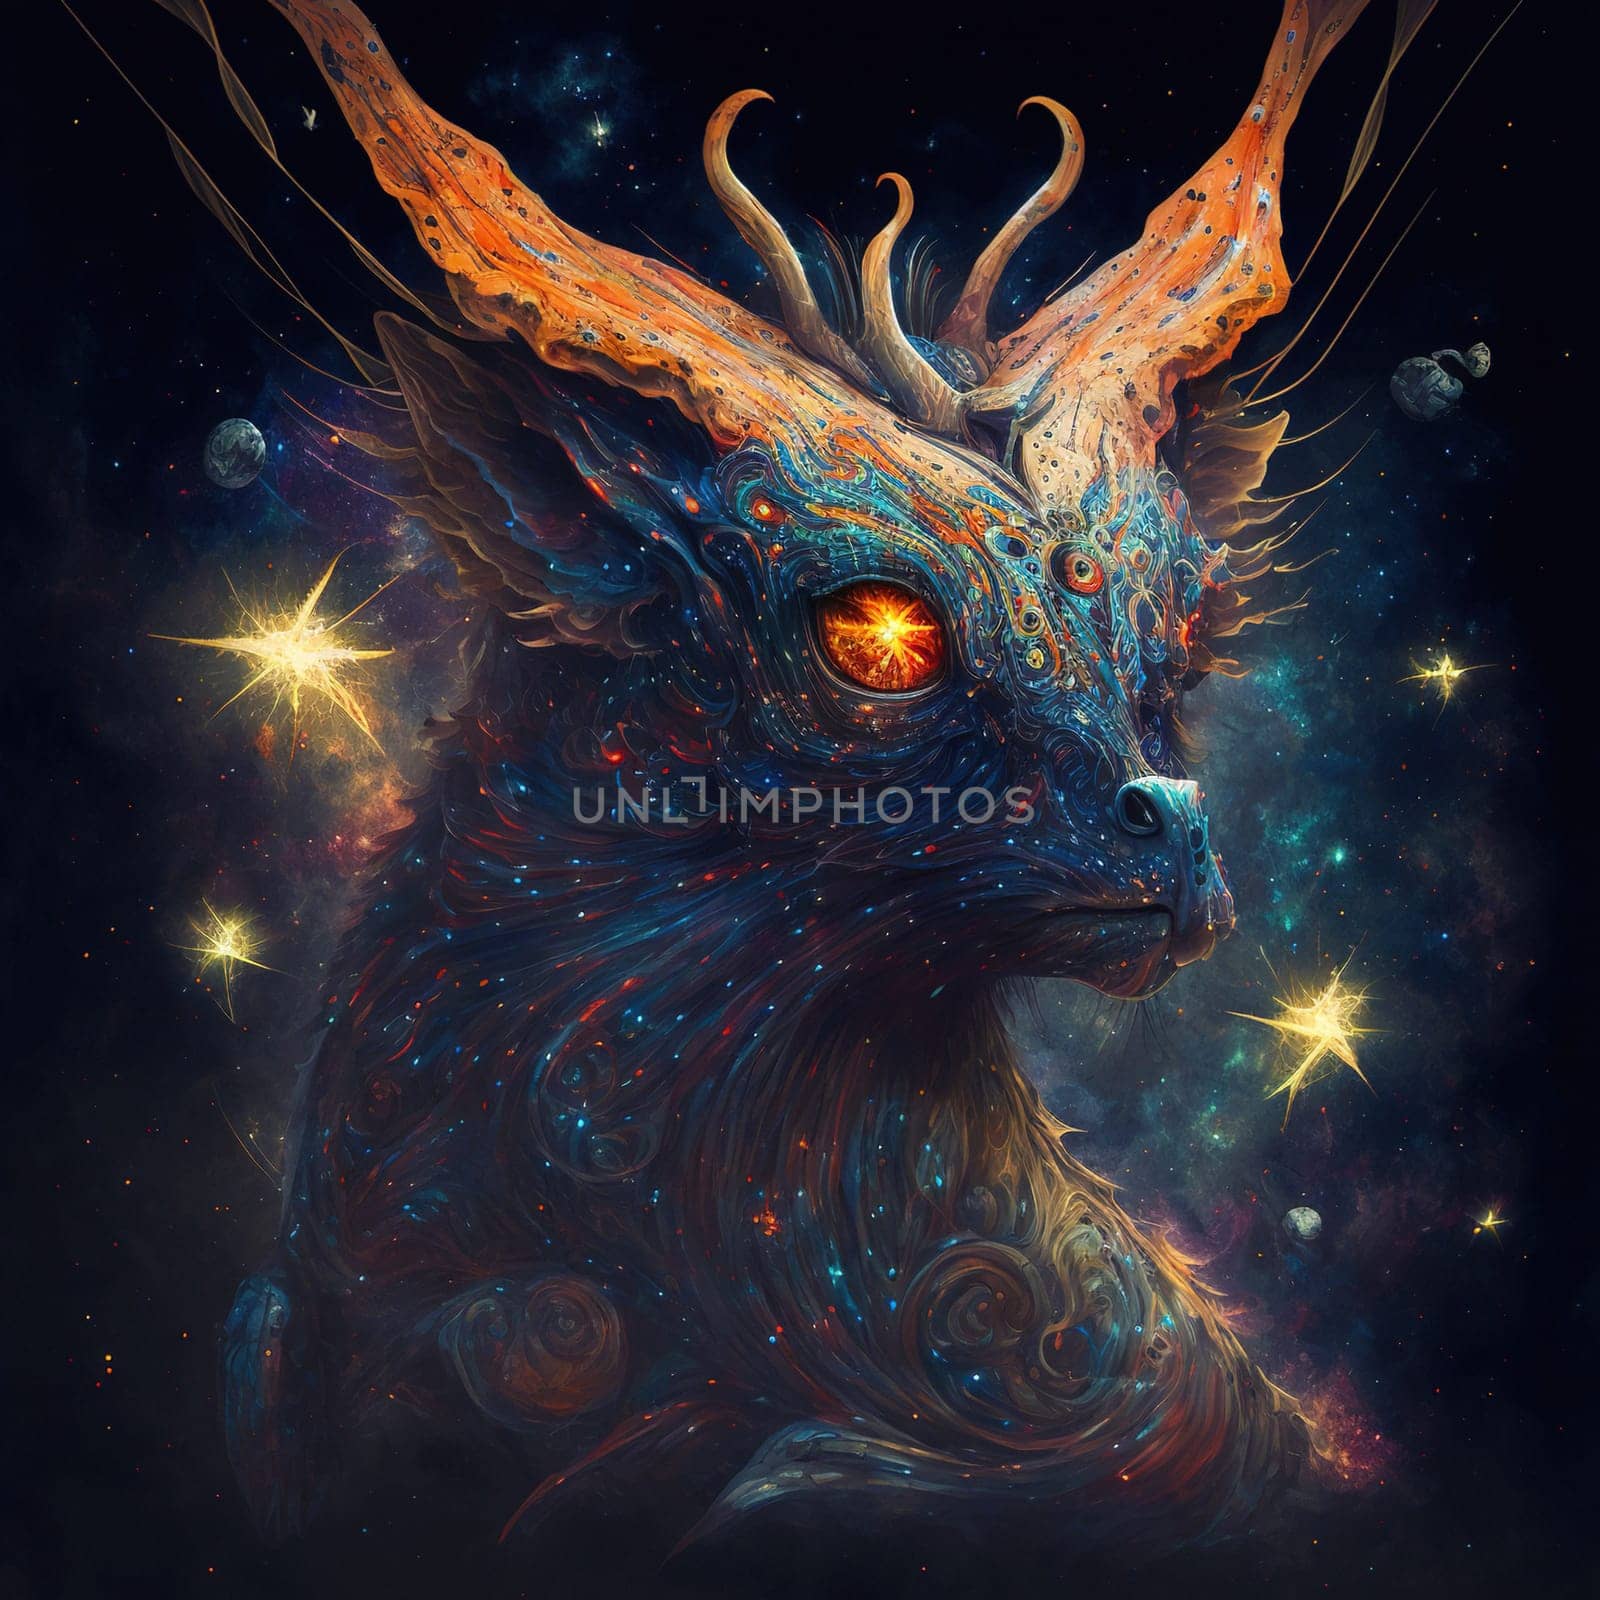 Phantasmagorical Cosmic Creatures and Sparkling Stars by igor010